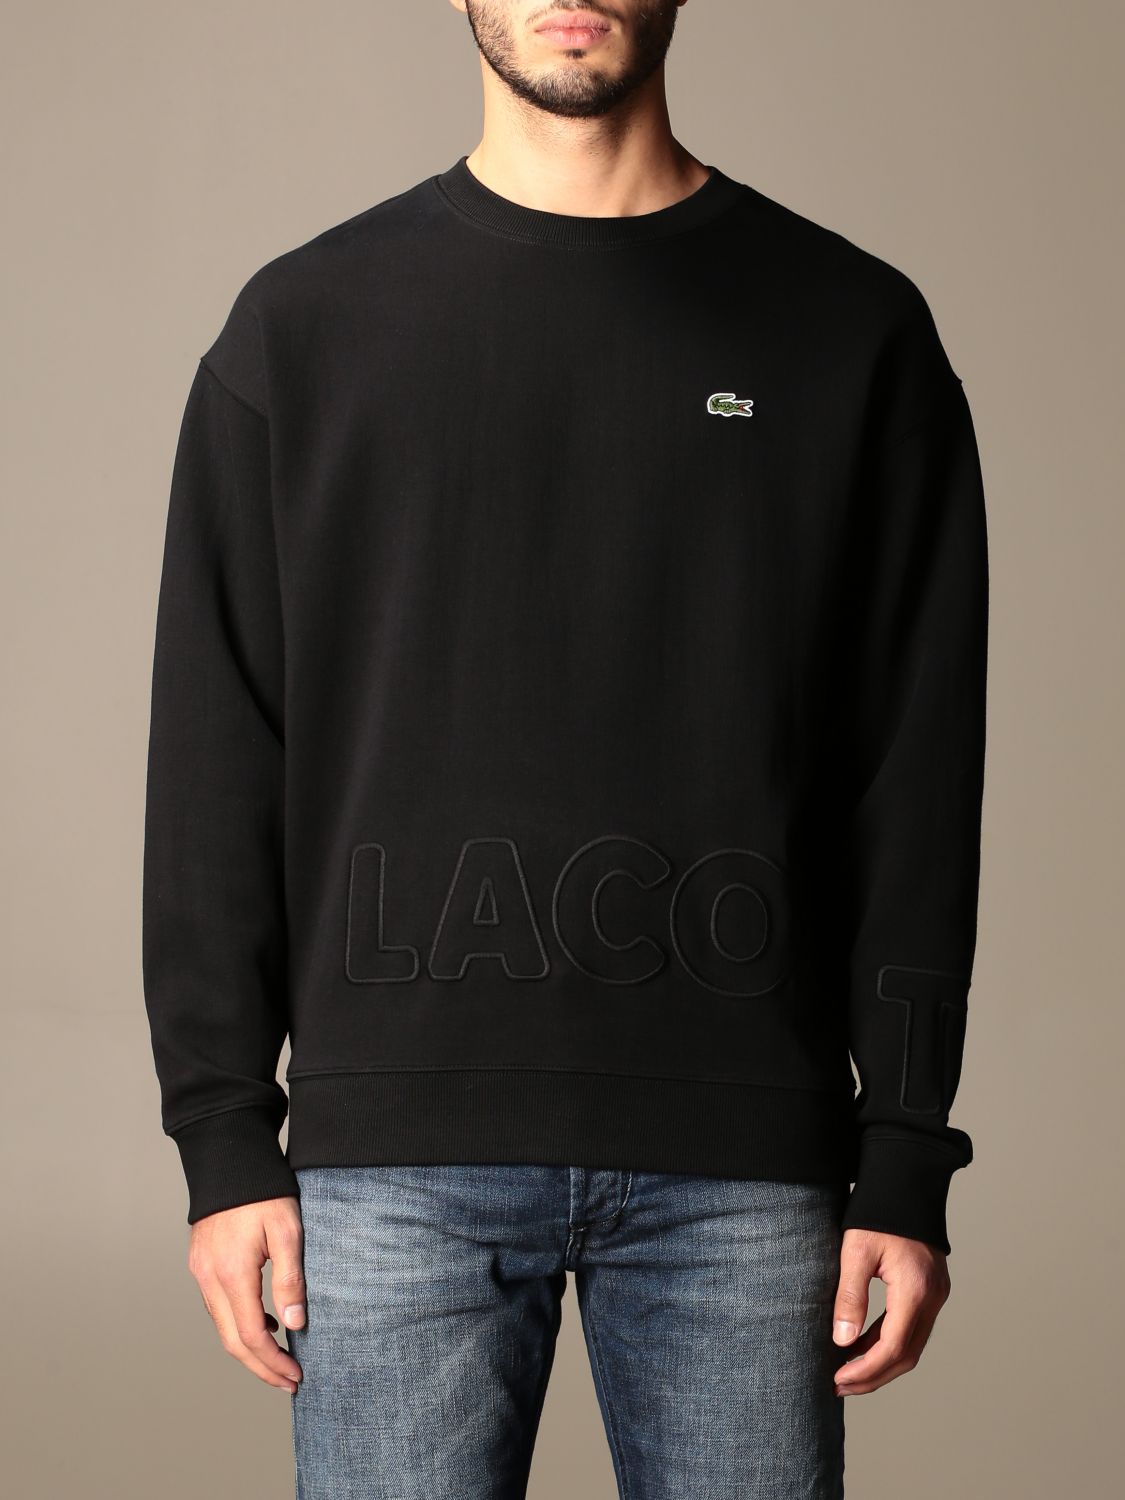 L!VE: Lacoste Live cotton sweatshirt with logo - Black | Lacoste sweatshirt SH1456 online at GIGLIO.COM